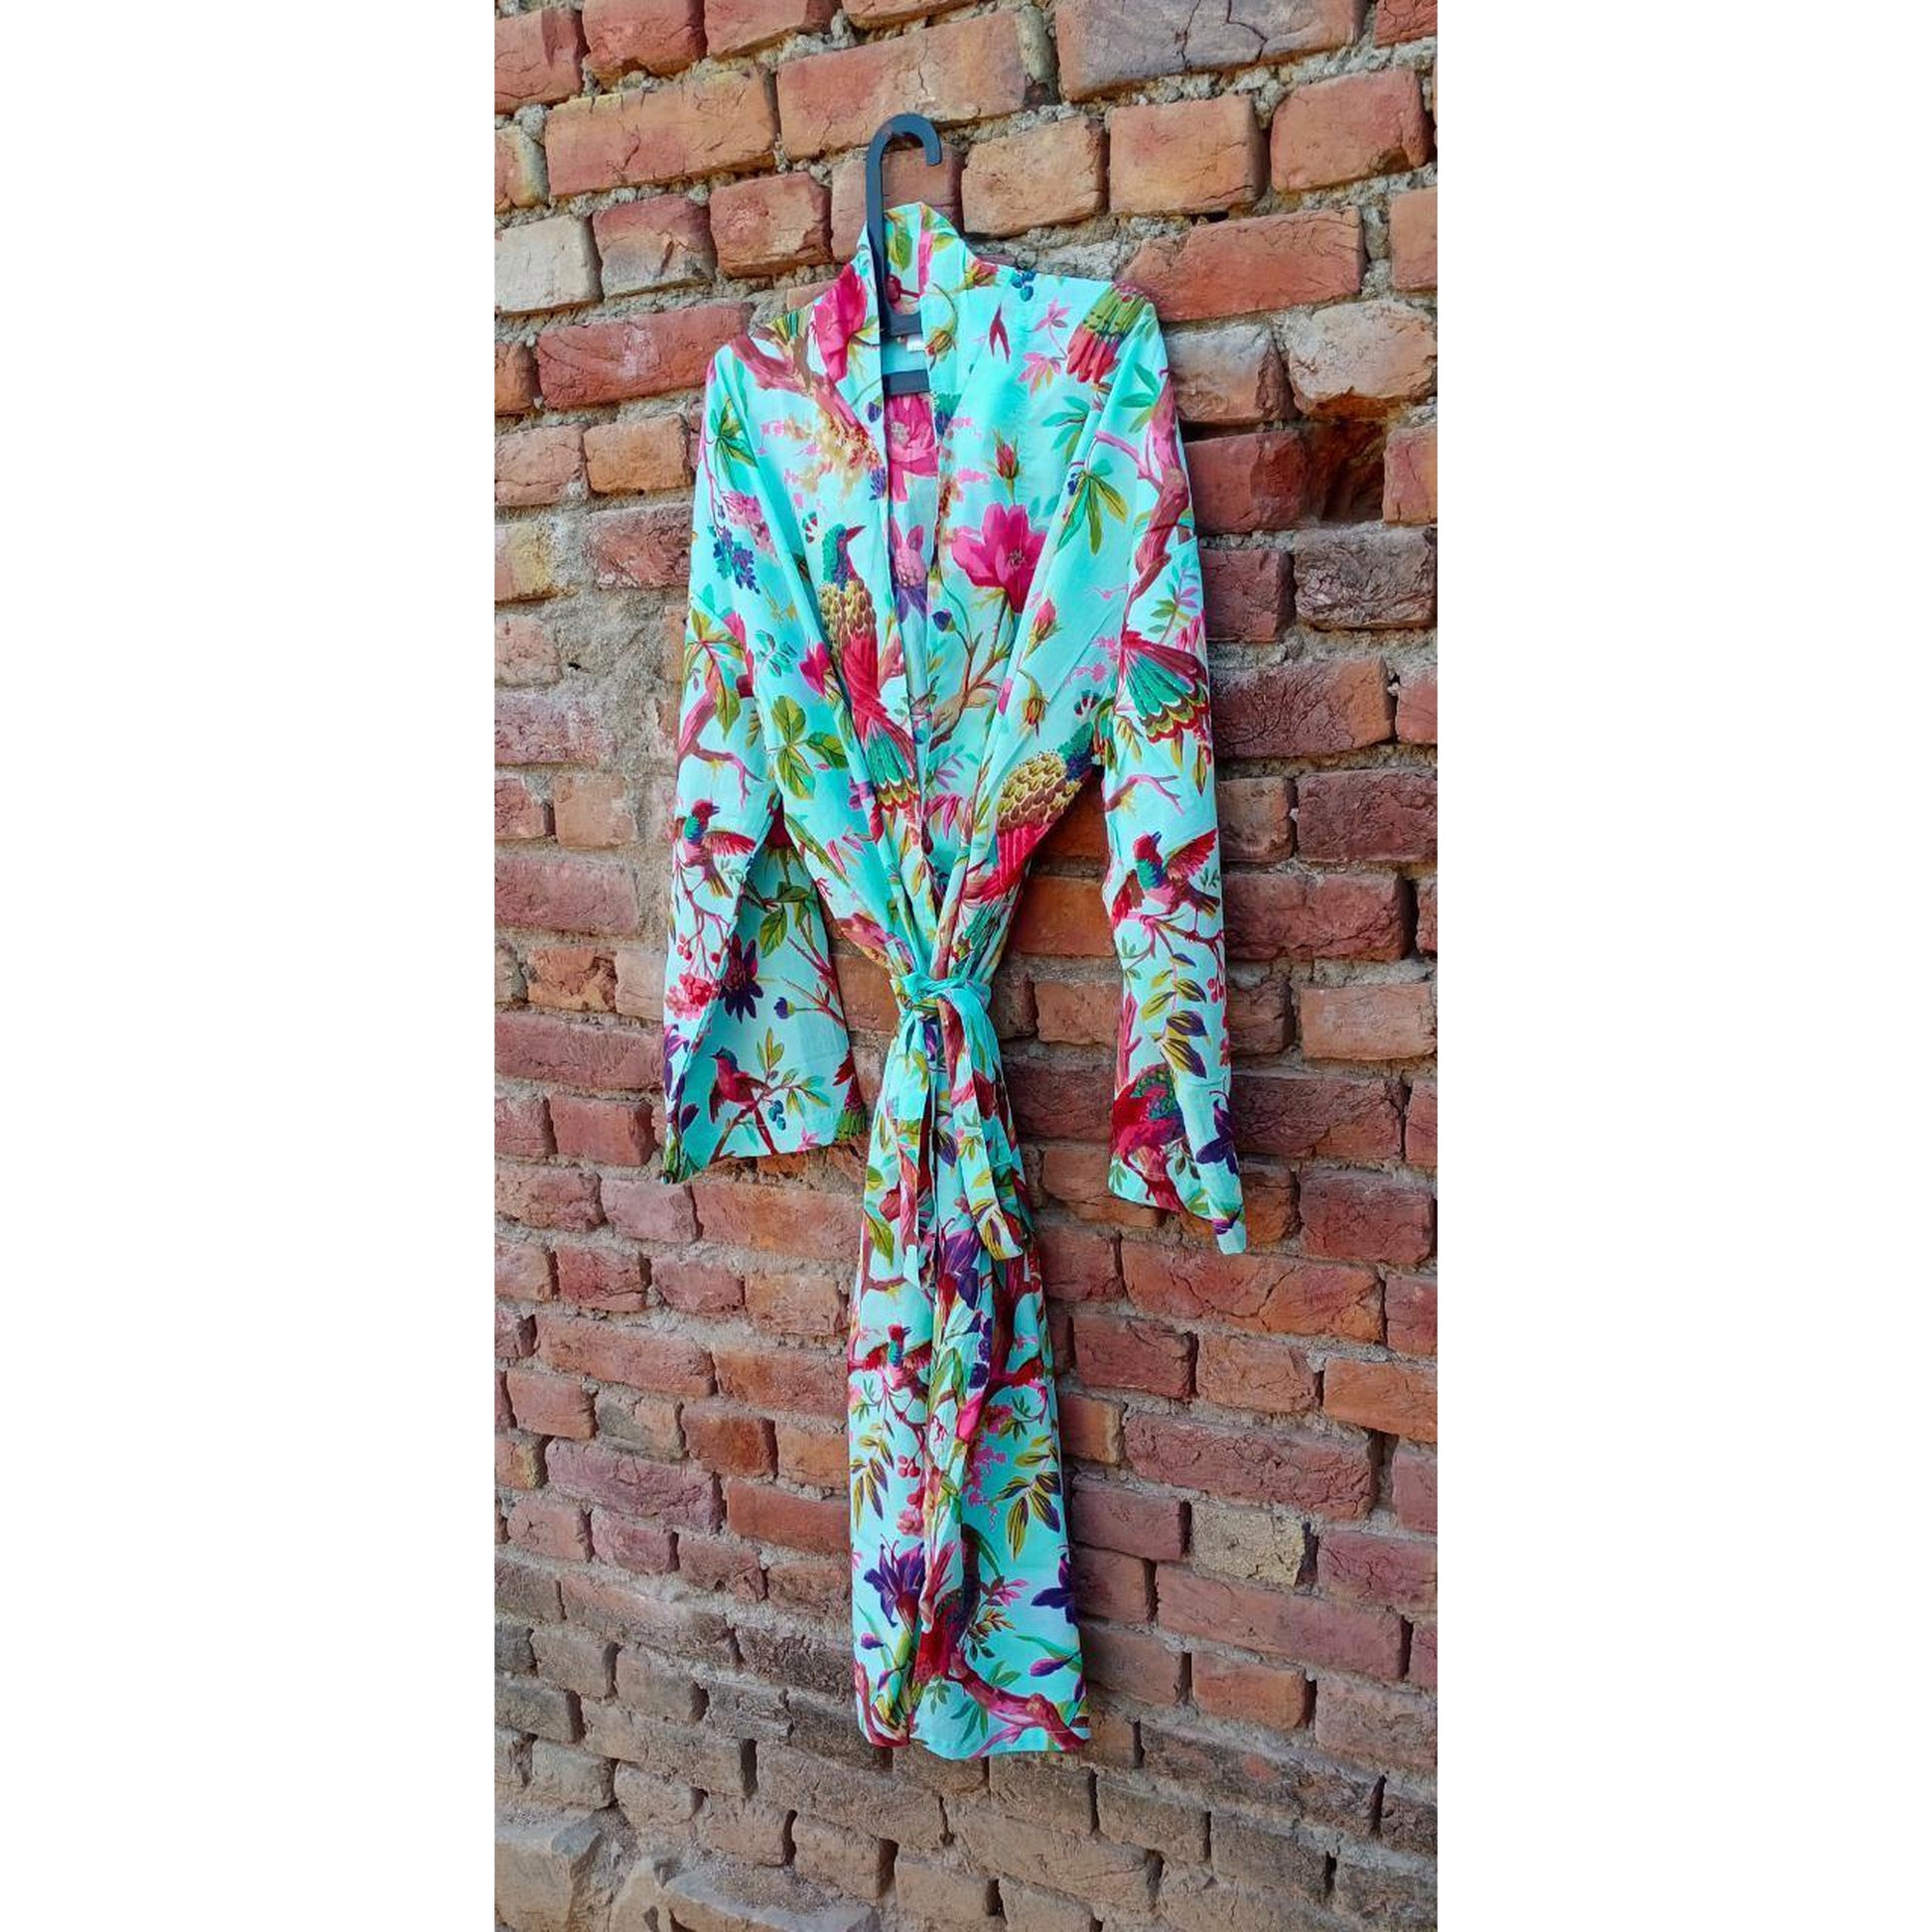 Kimono Bath Robes/ Night Suit turquoise paradise - The Teal Thread